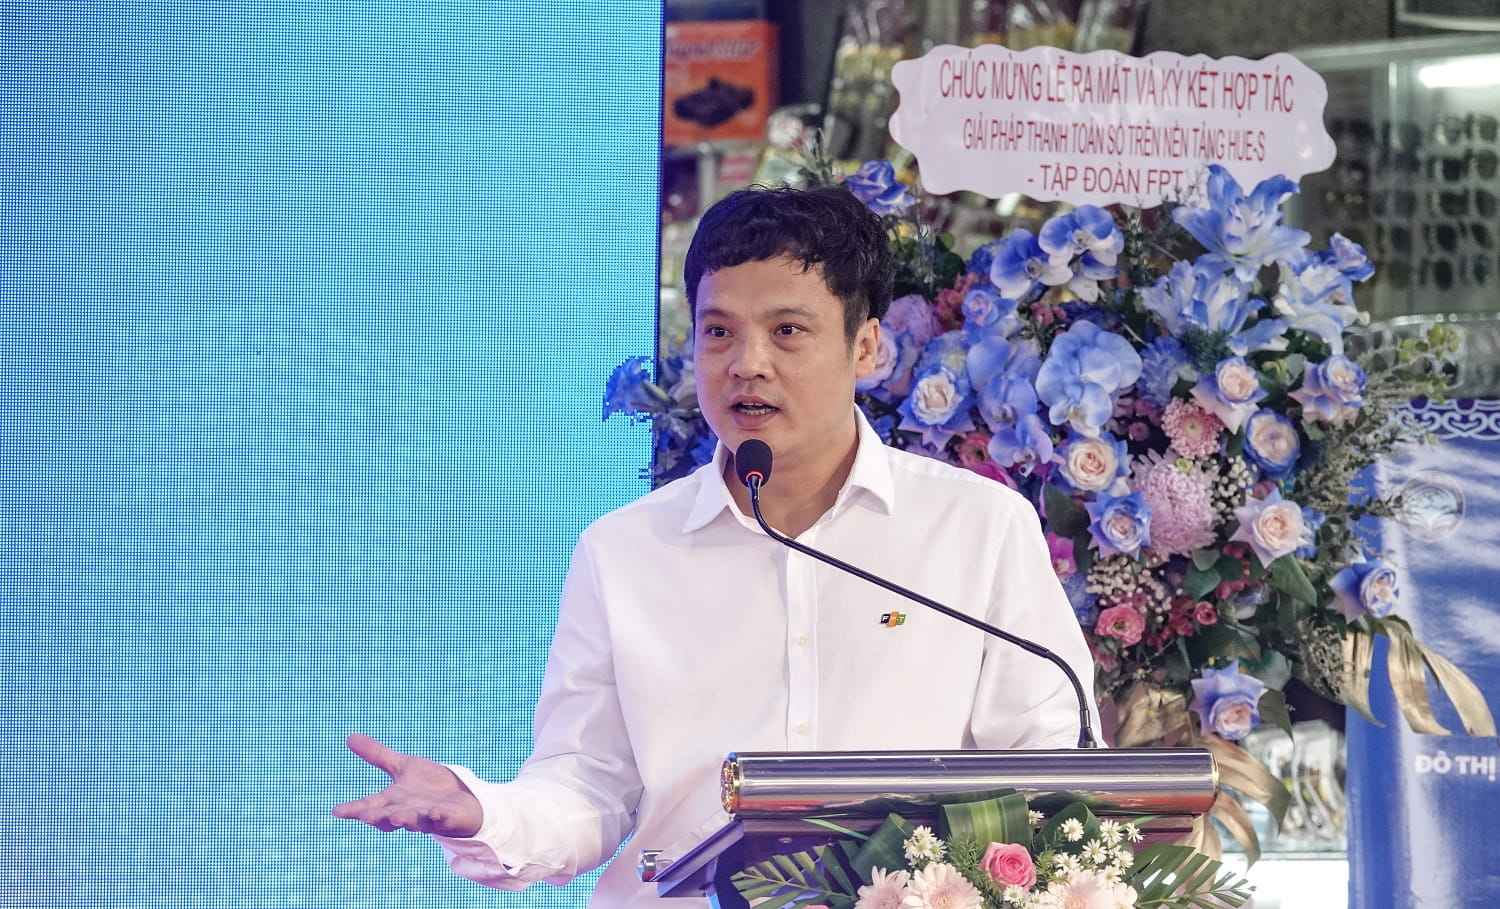 Mr. Nguyen Van Khoa - CEO of FPT Corporation - spoke at the event